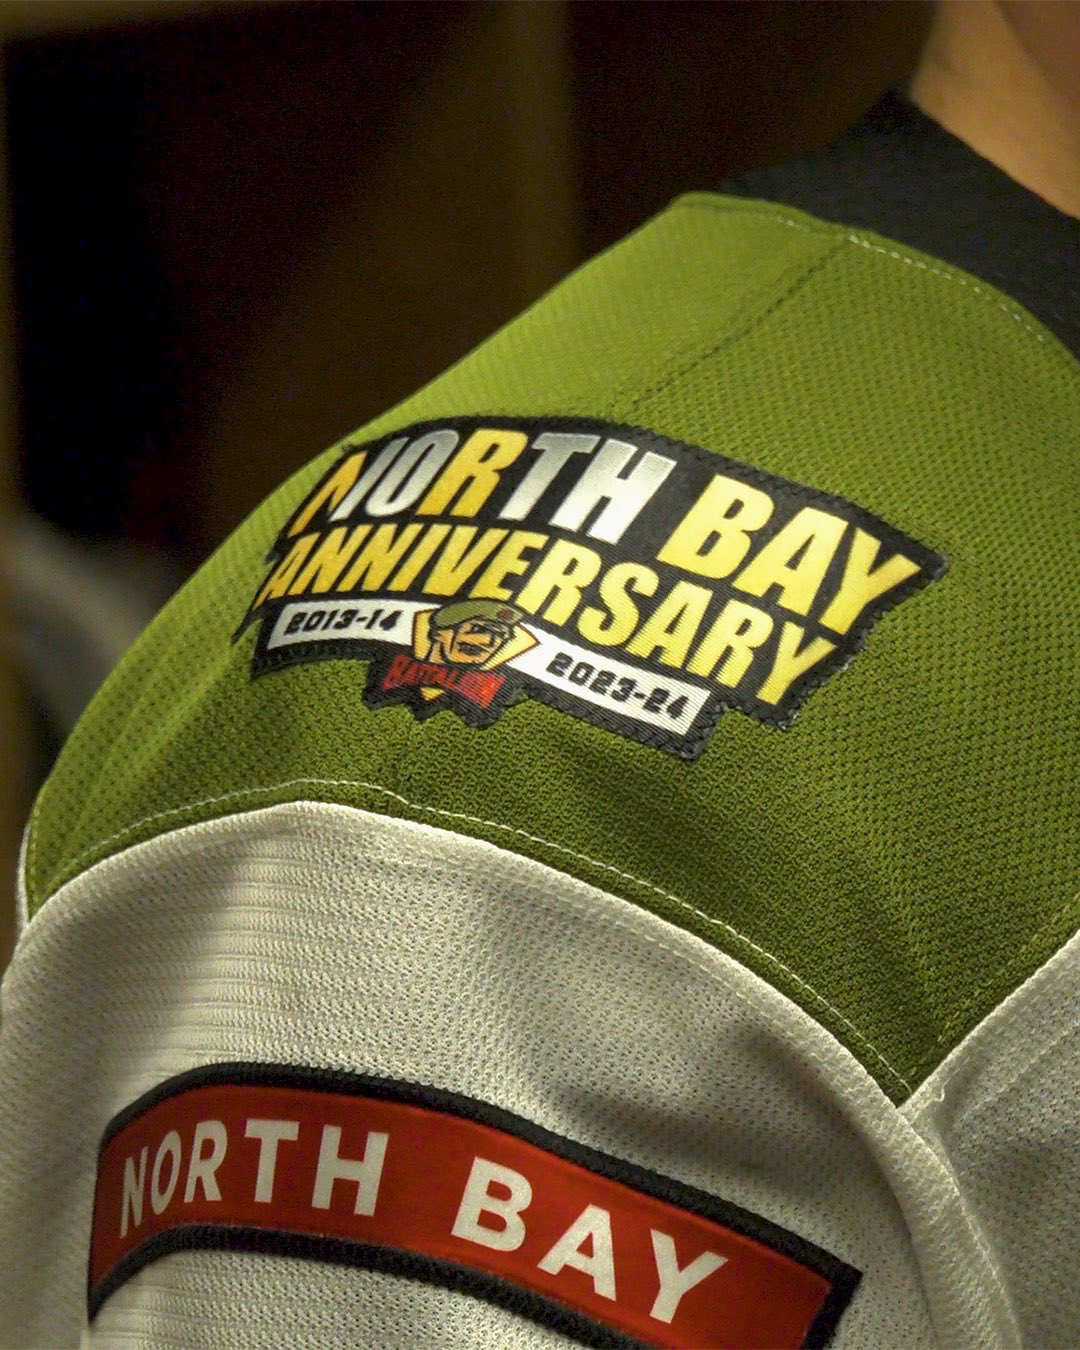 Battalion to sport new threads this season - North Bay News